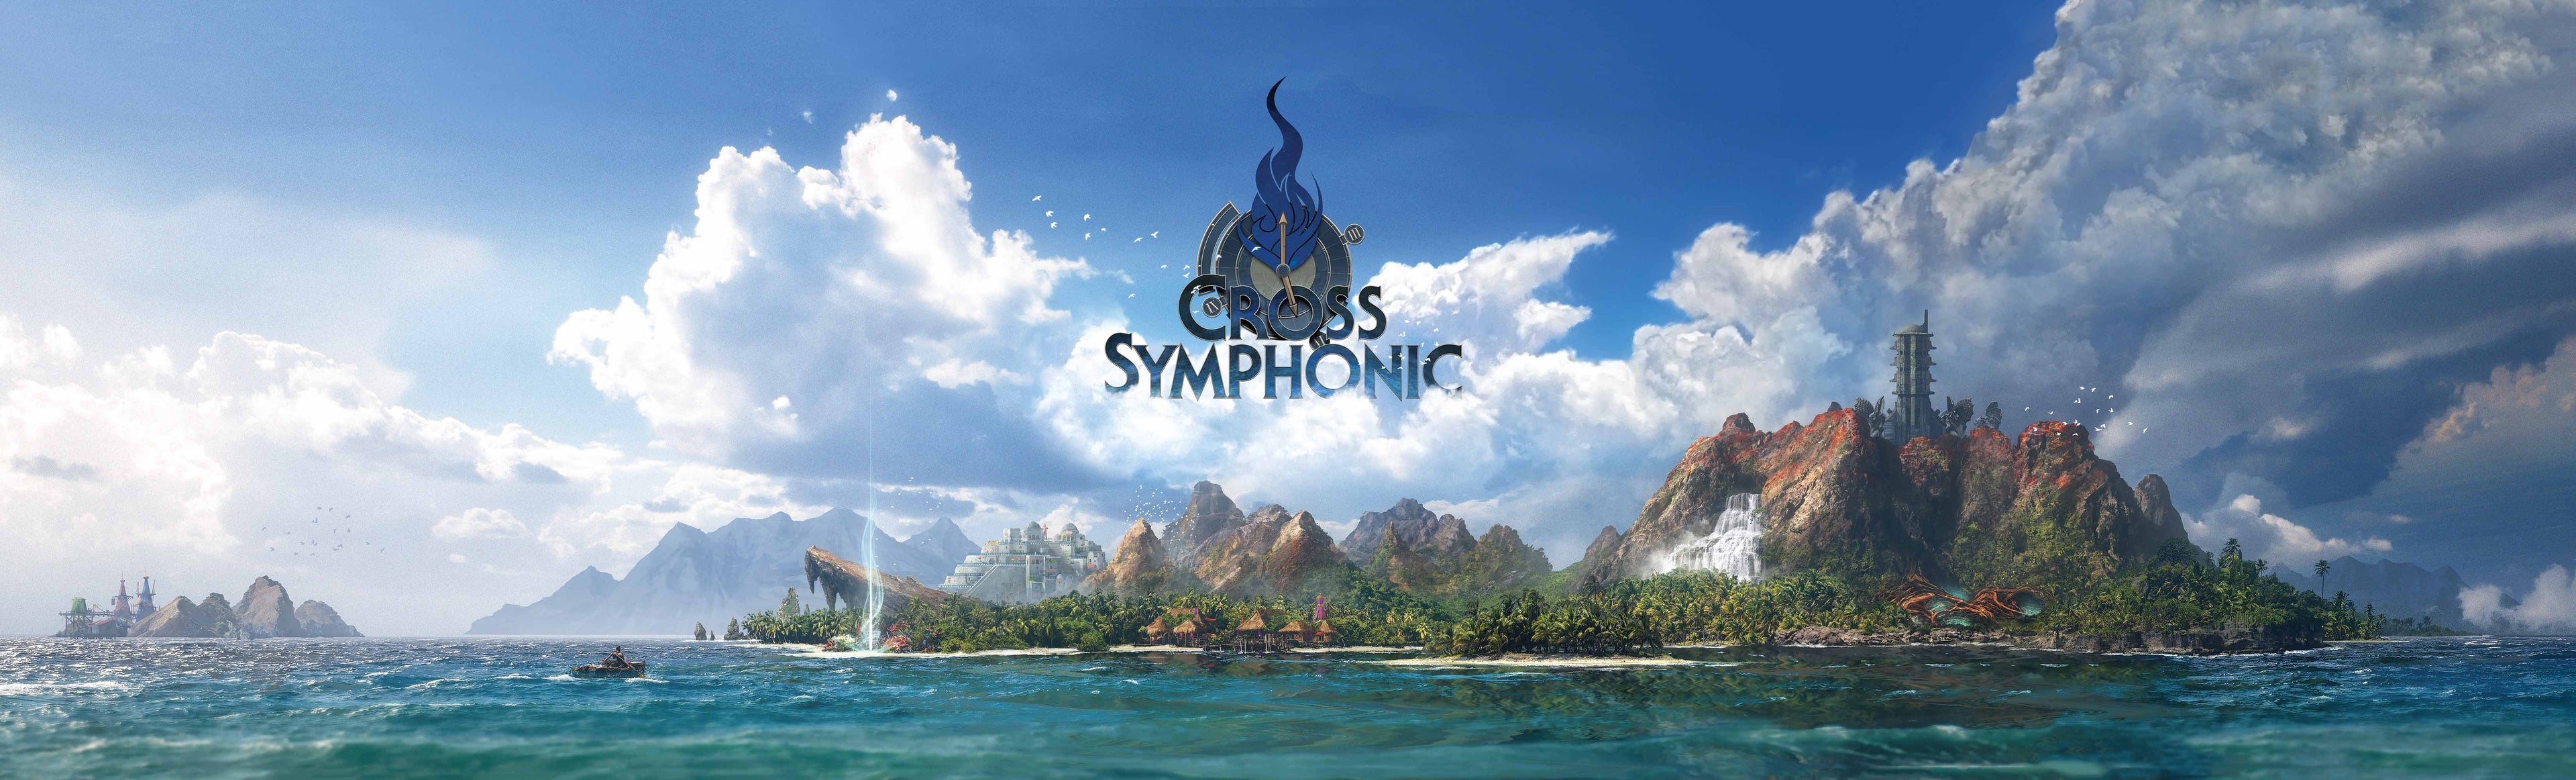 Cross Symphonic - A Symphonic Tribute to "Chrono Cross" | Hayward Publishing